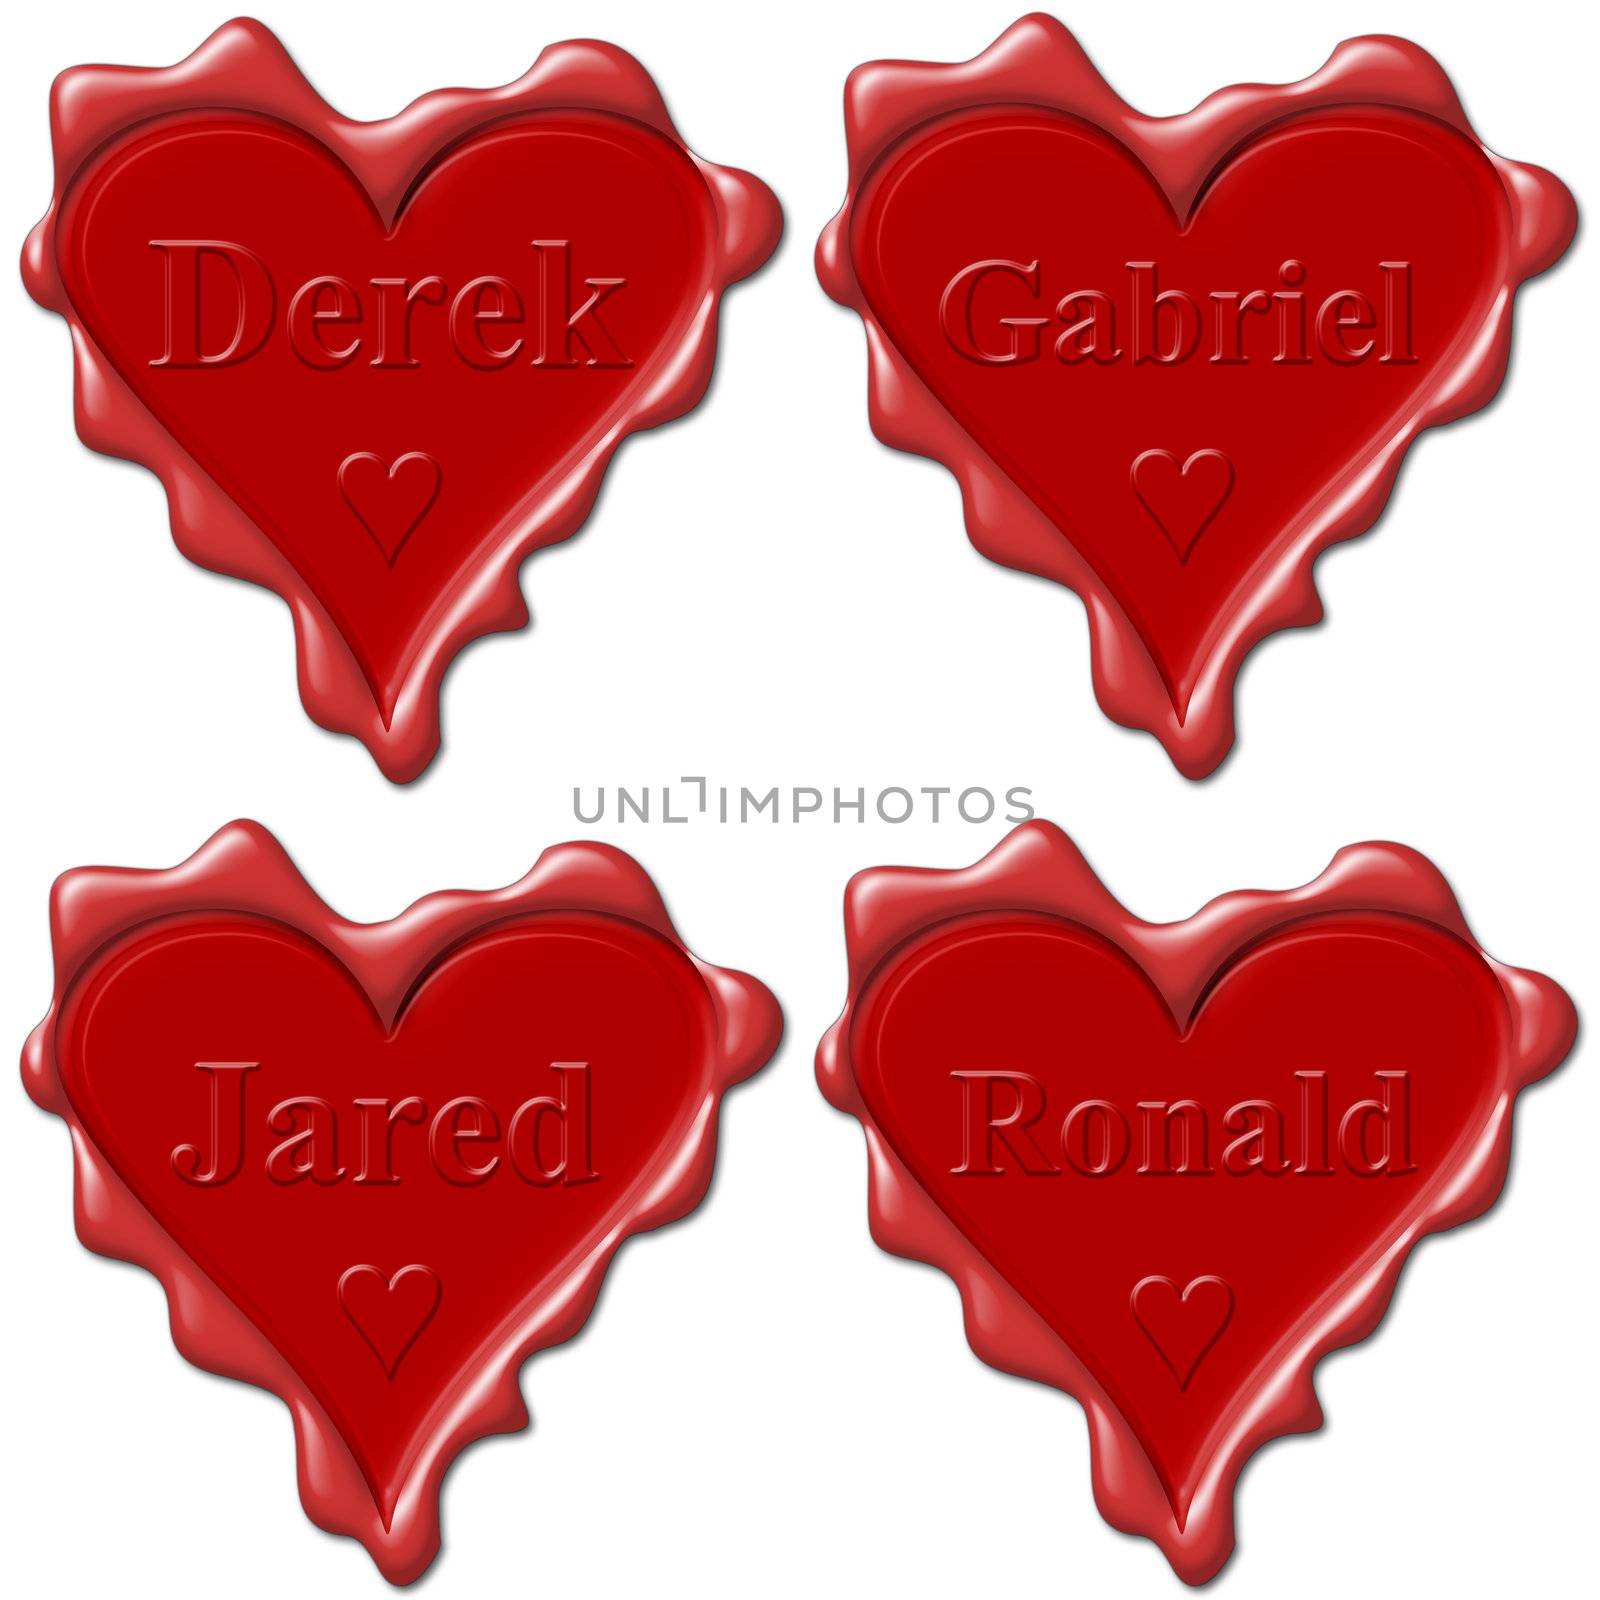 Valentine love hearts with names: Derek, Gabriel, Jared, Ronald by mozzyb